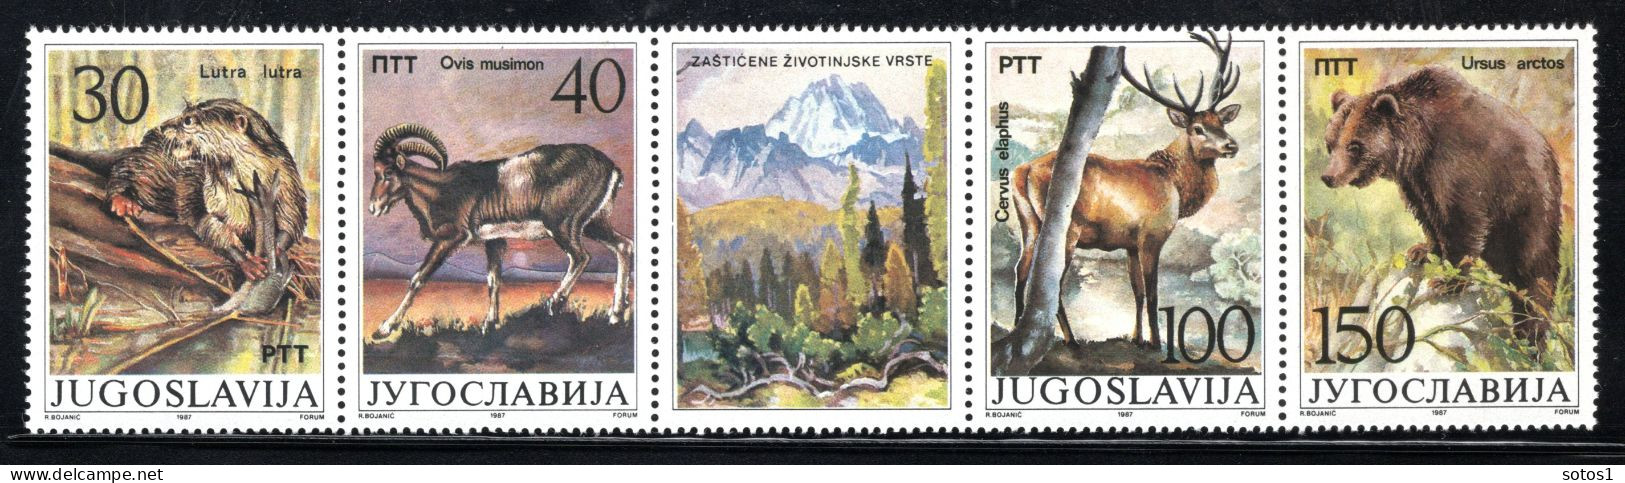 JOEGOSLAVIE Yt. 2085/2088 MNH 1987 - Unused Stamps